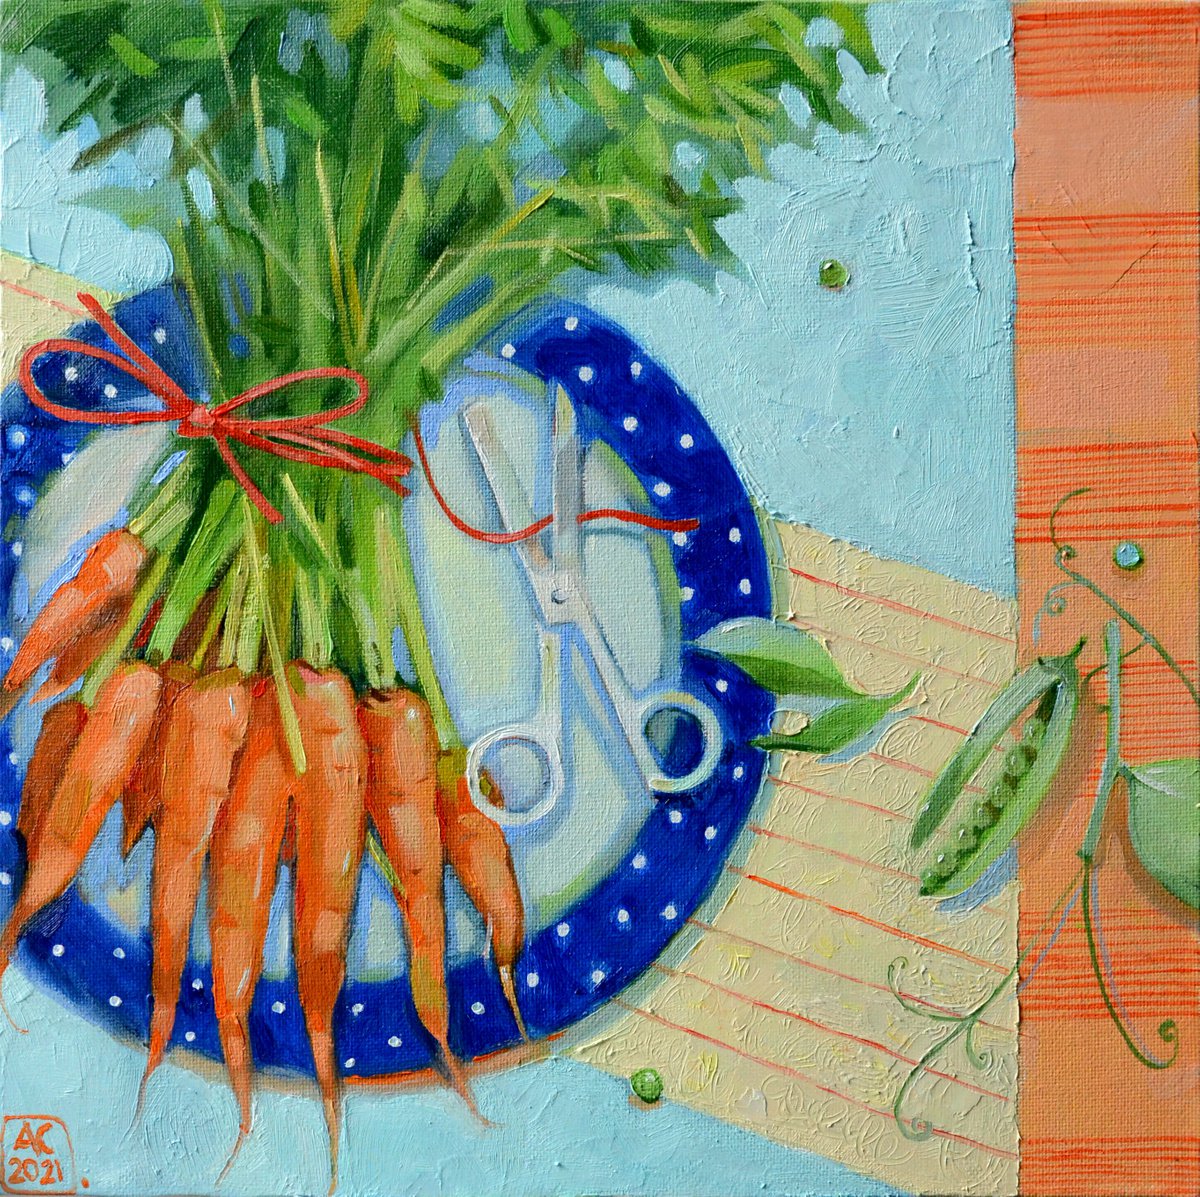 Still life with carrots and peas by Alexandra Sergeeva